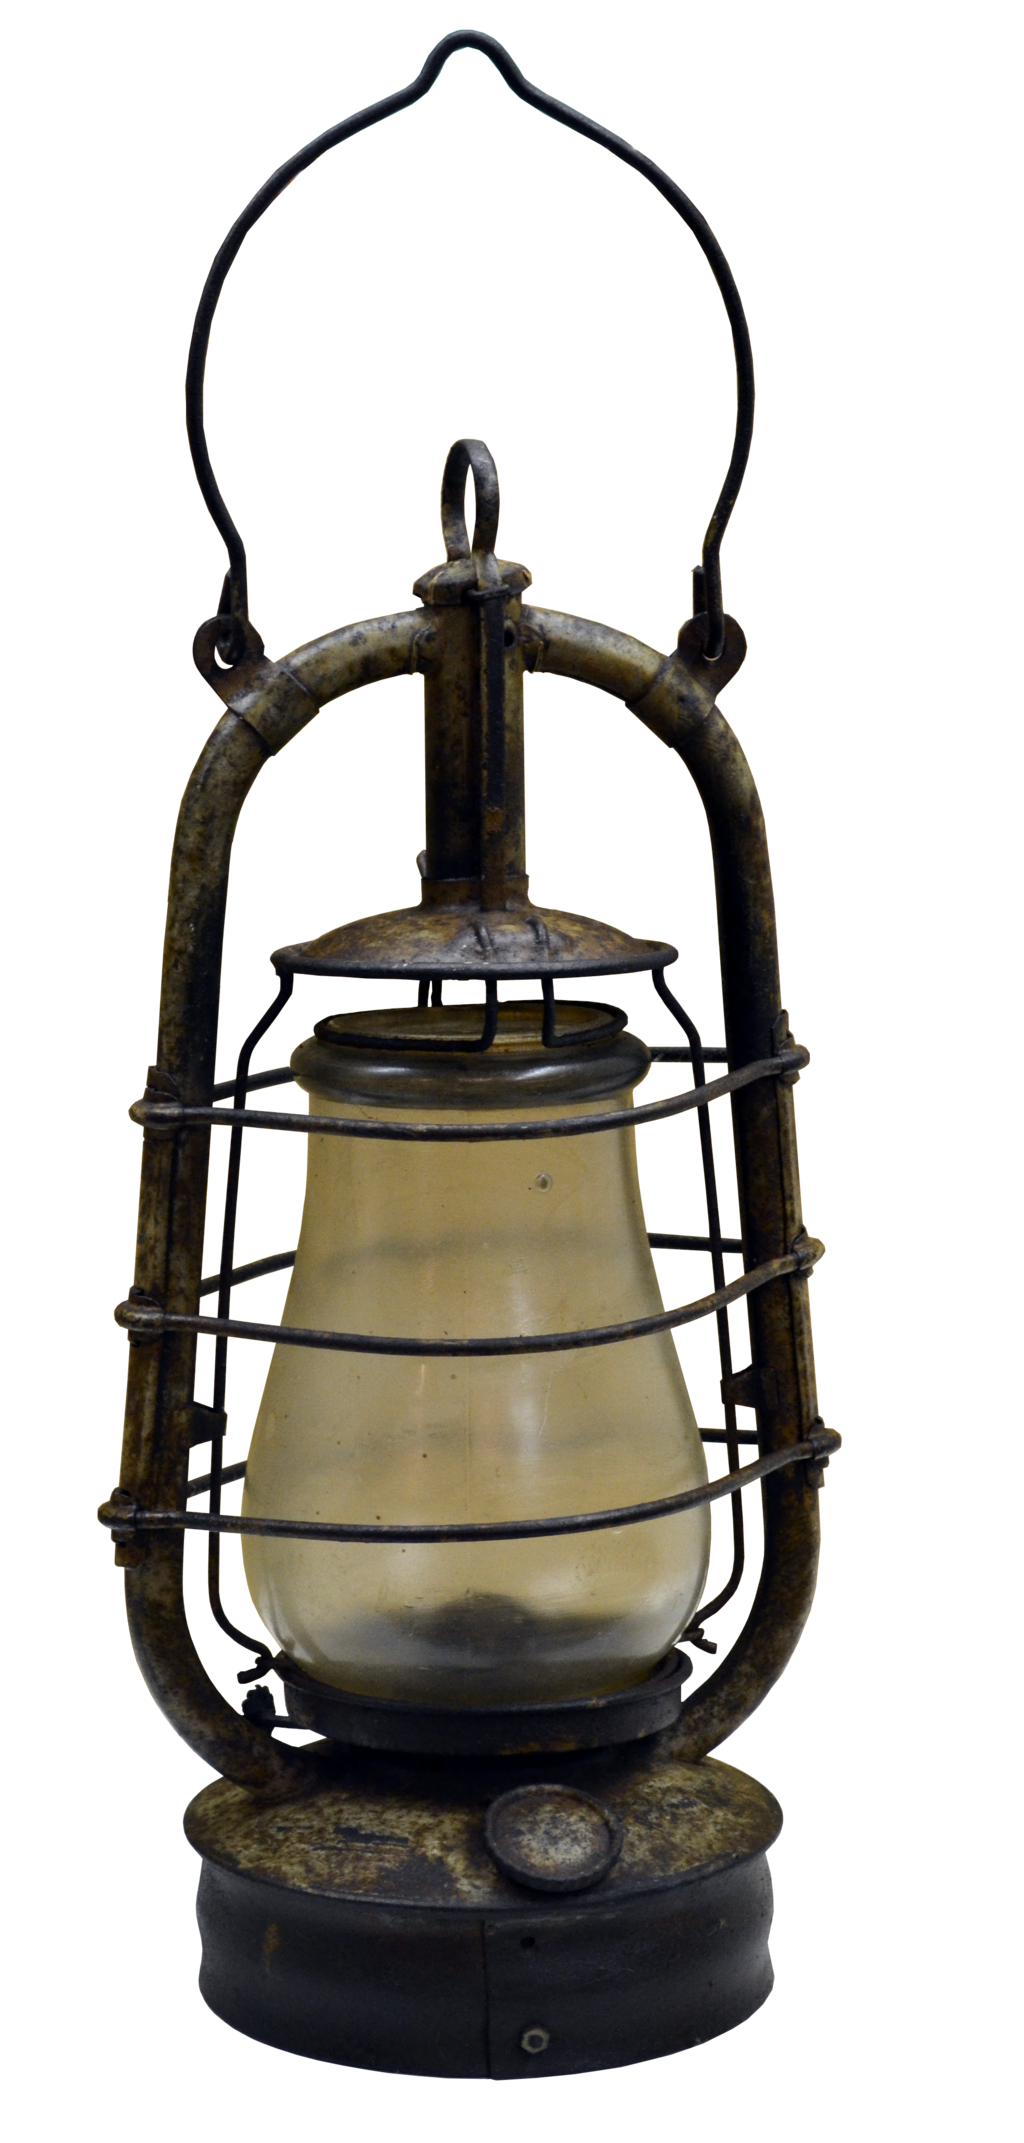 Kerosene Lamp Png - Oil Lamp Png Image #34929, Transparent background PNG HD thumbnail